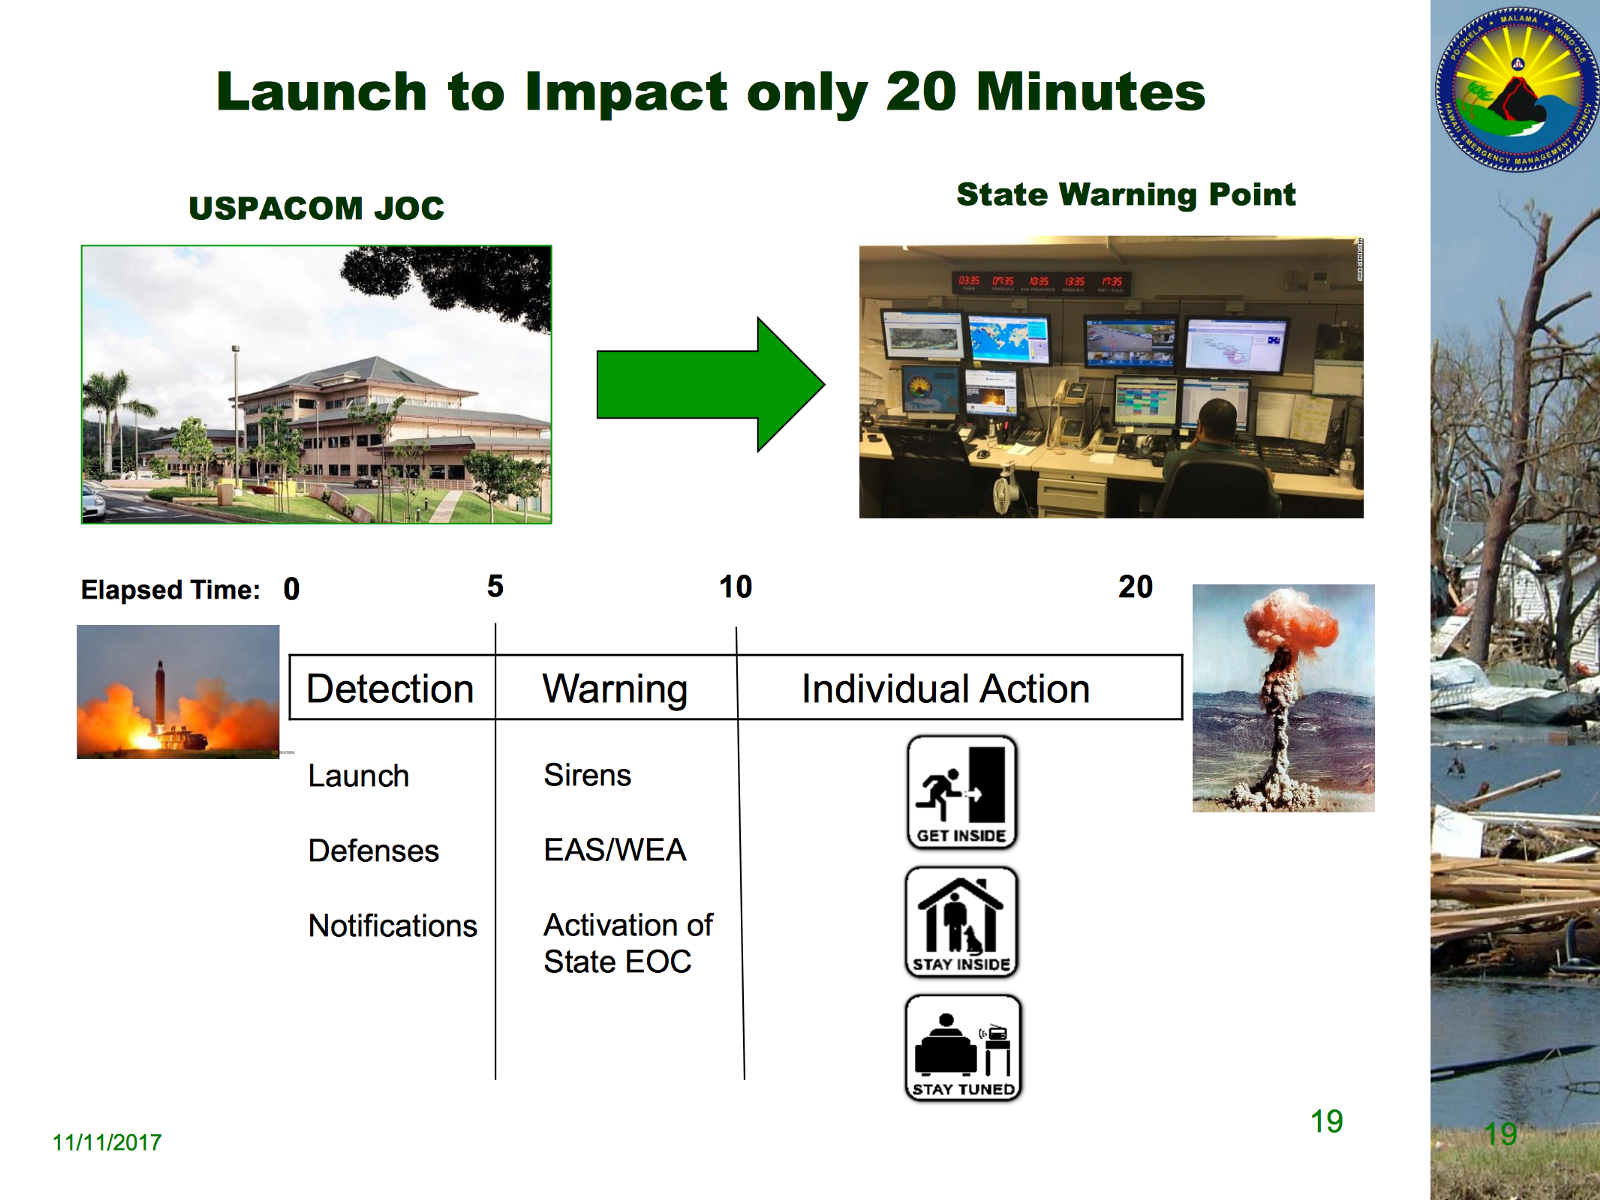 A presentation slide from HIEMA's emergency preparedness slide deck